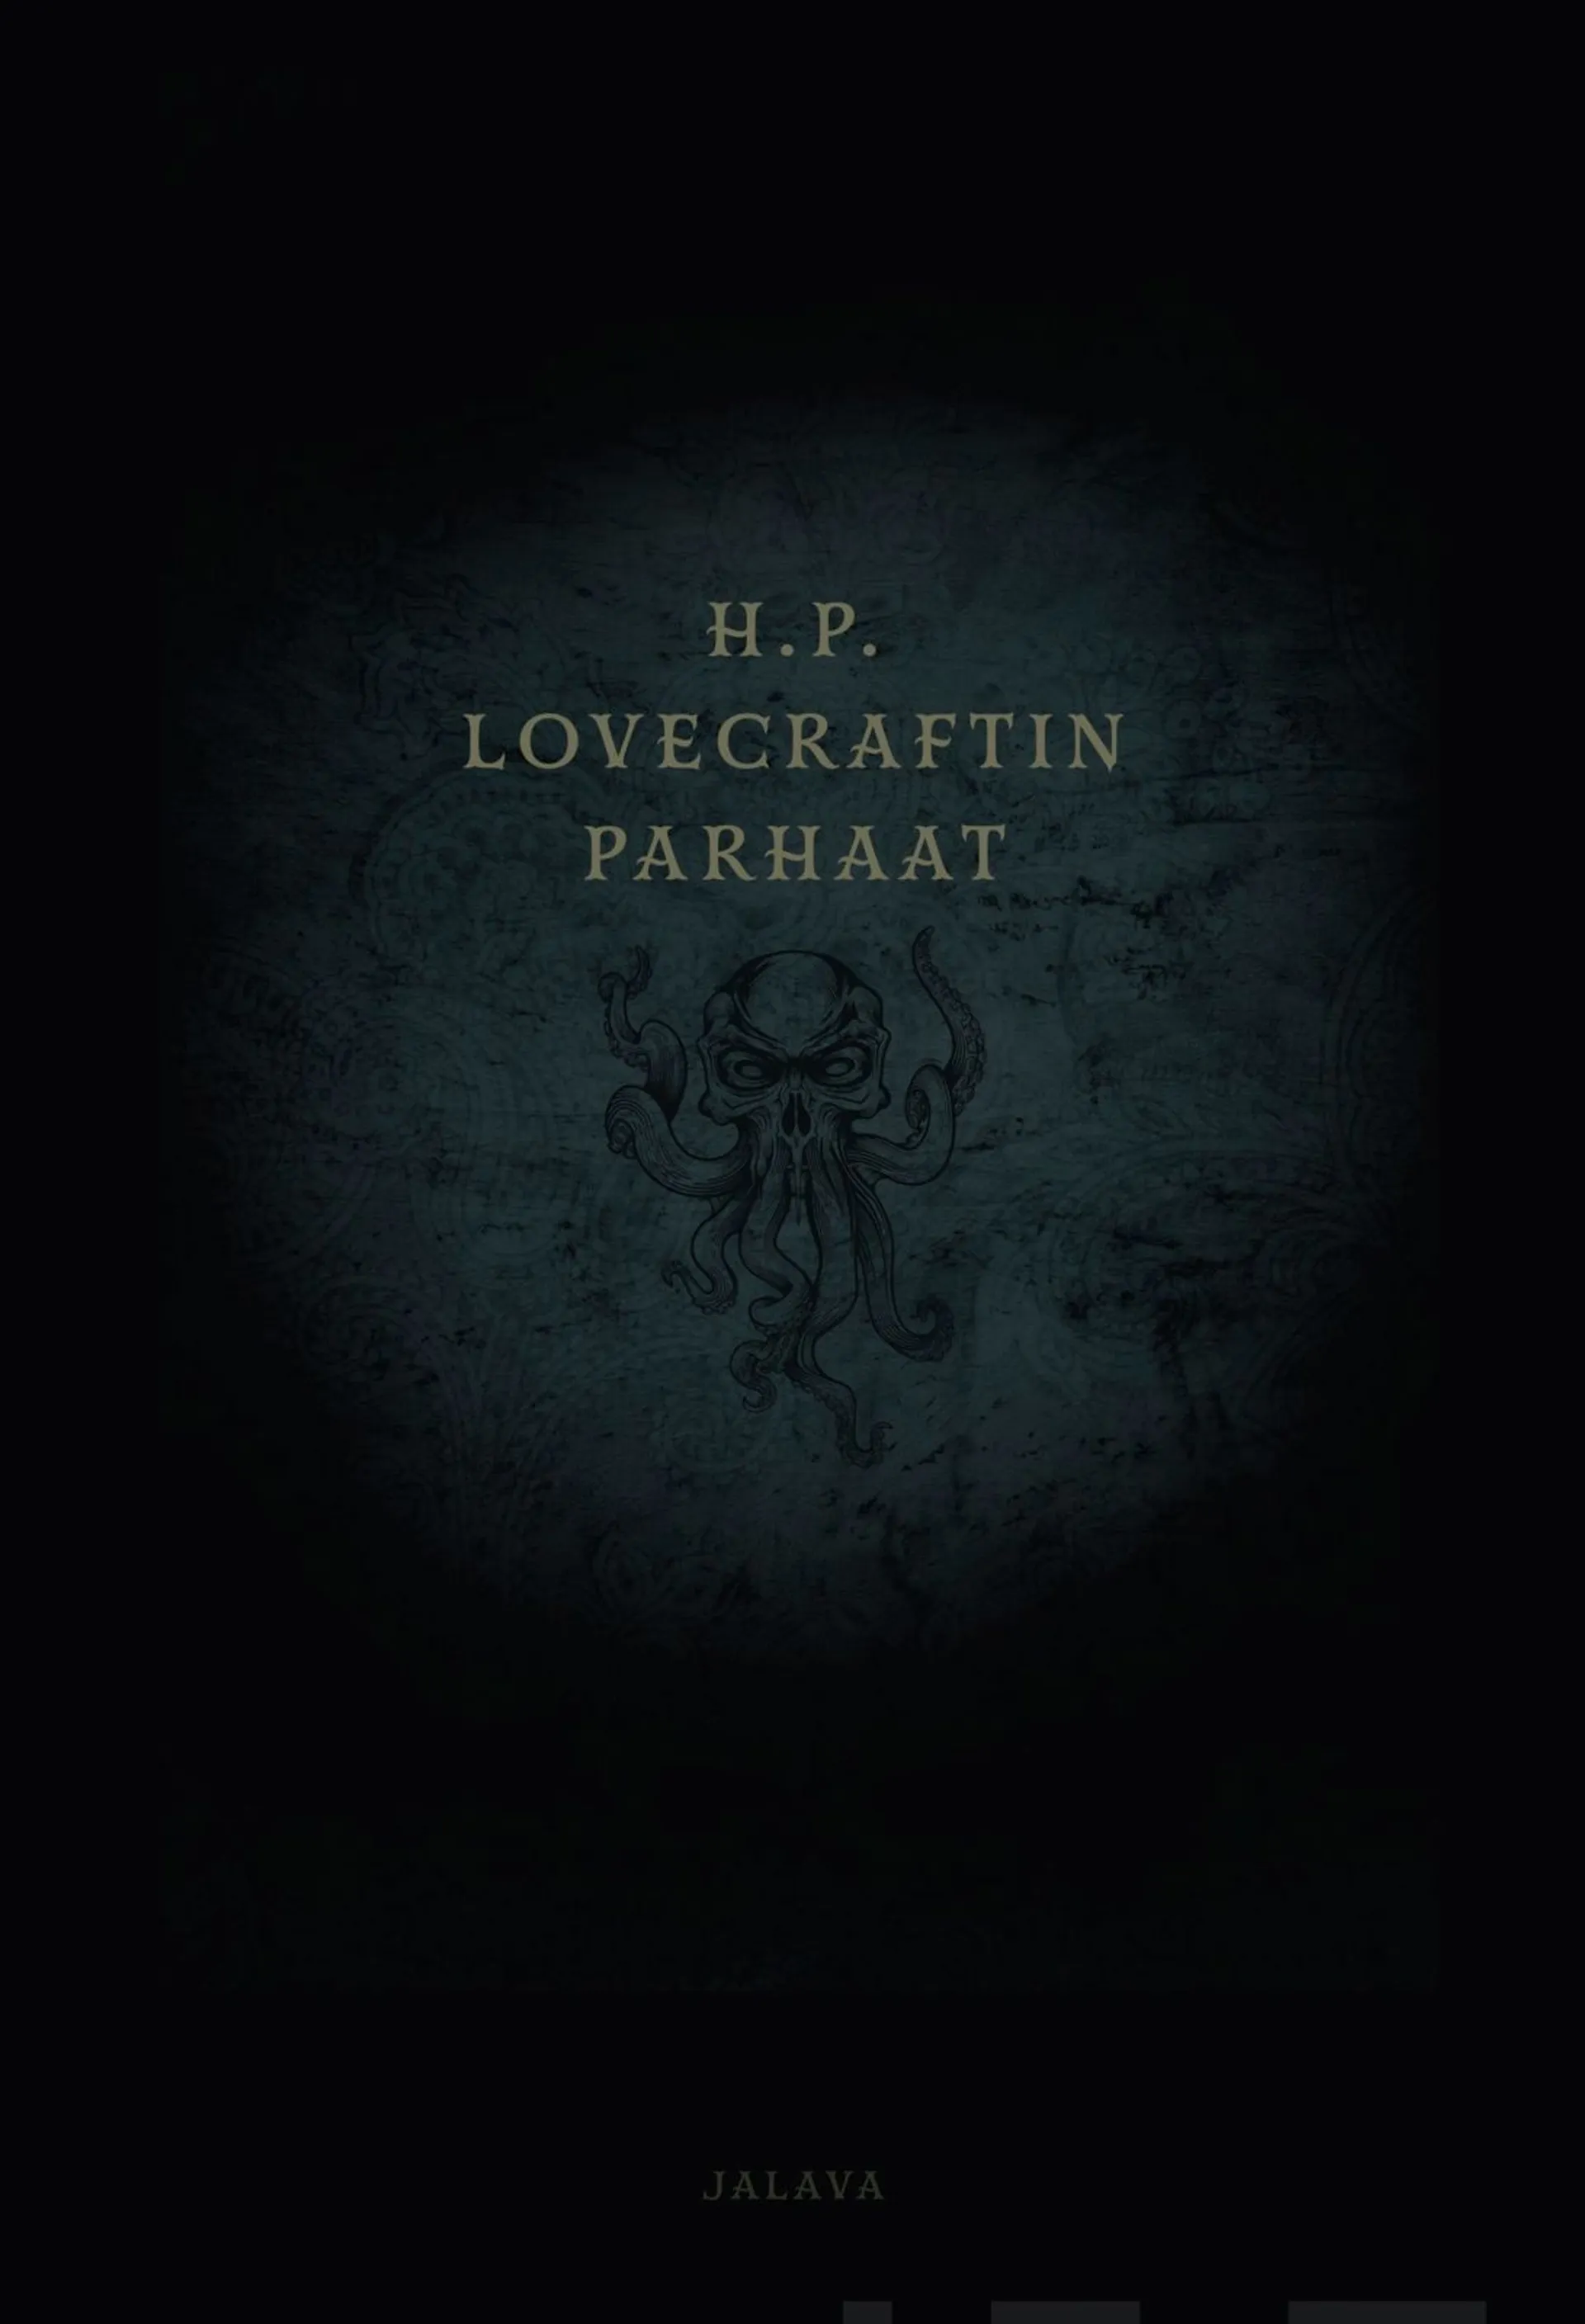 Lovecraft, H. P. Lovecraftin parhaat